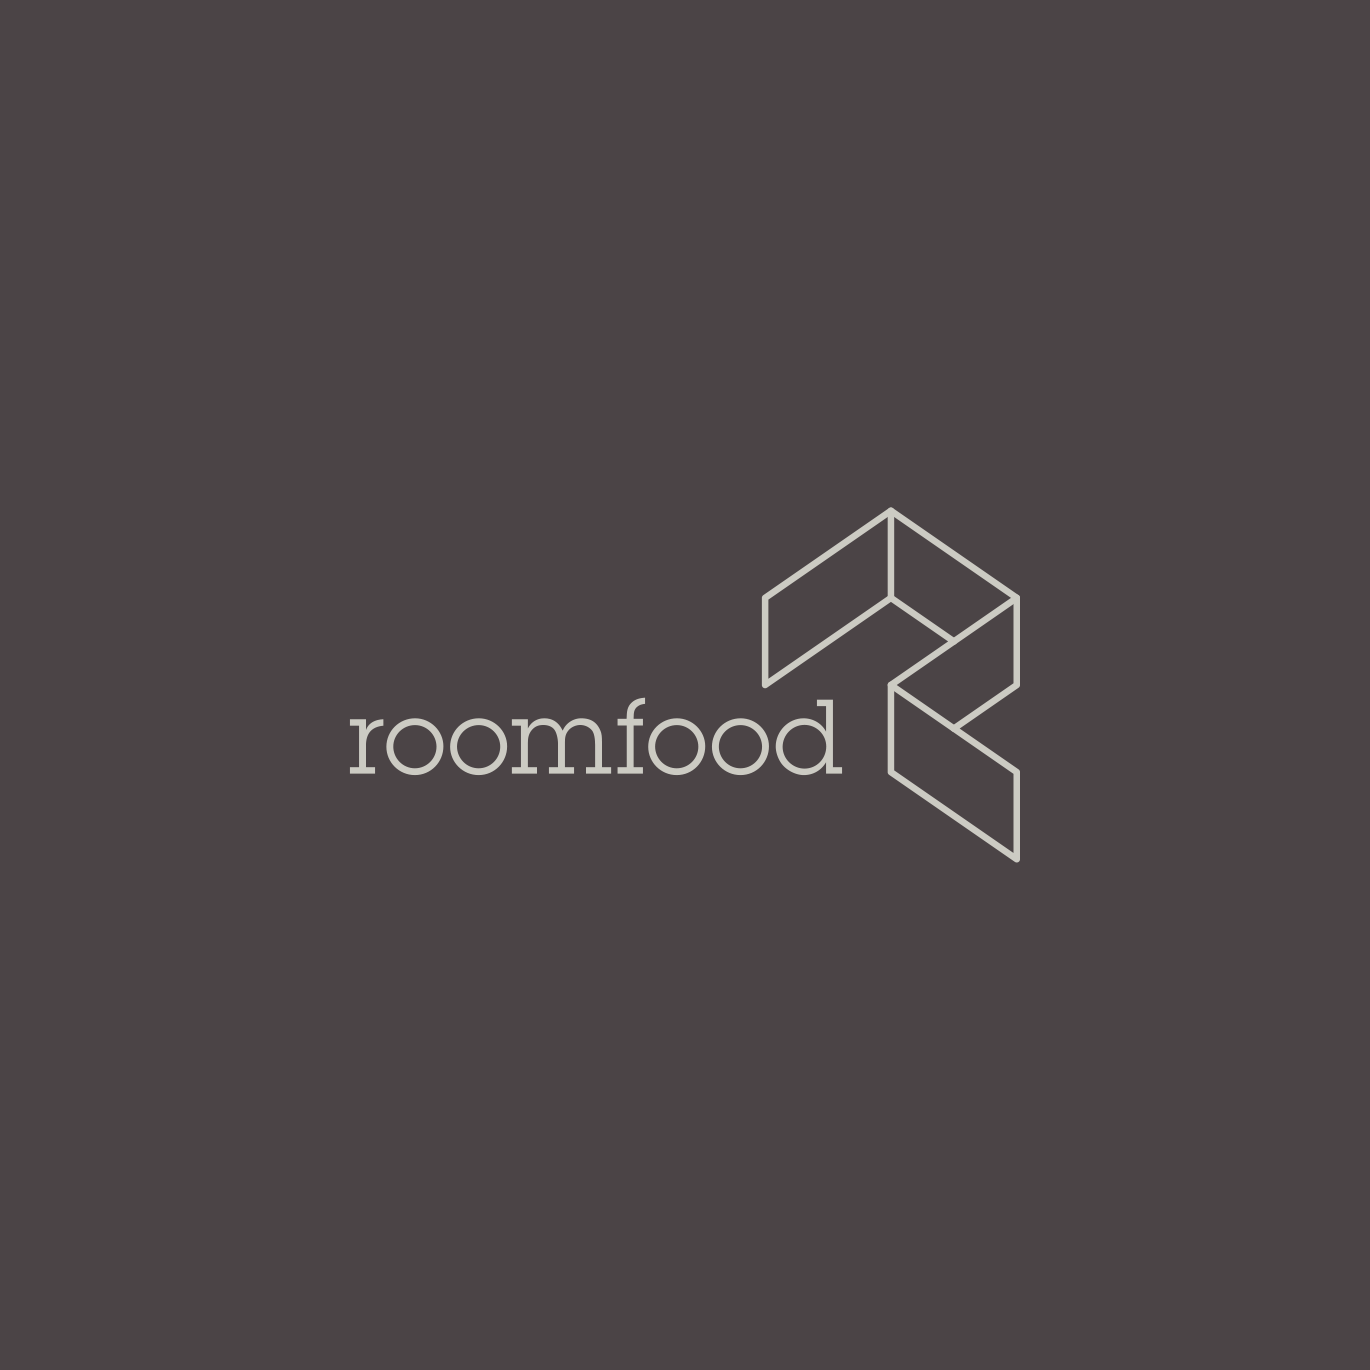 Roomfood Logo